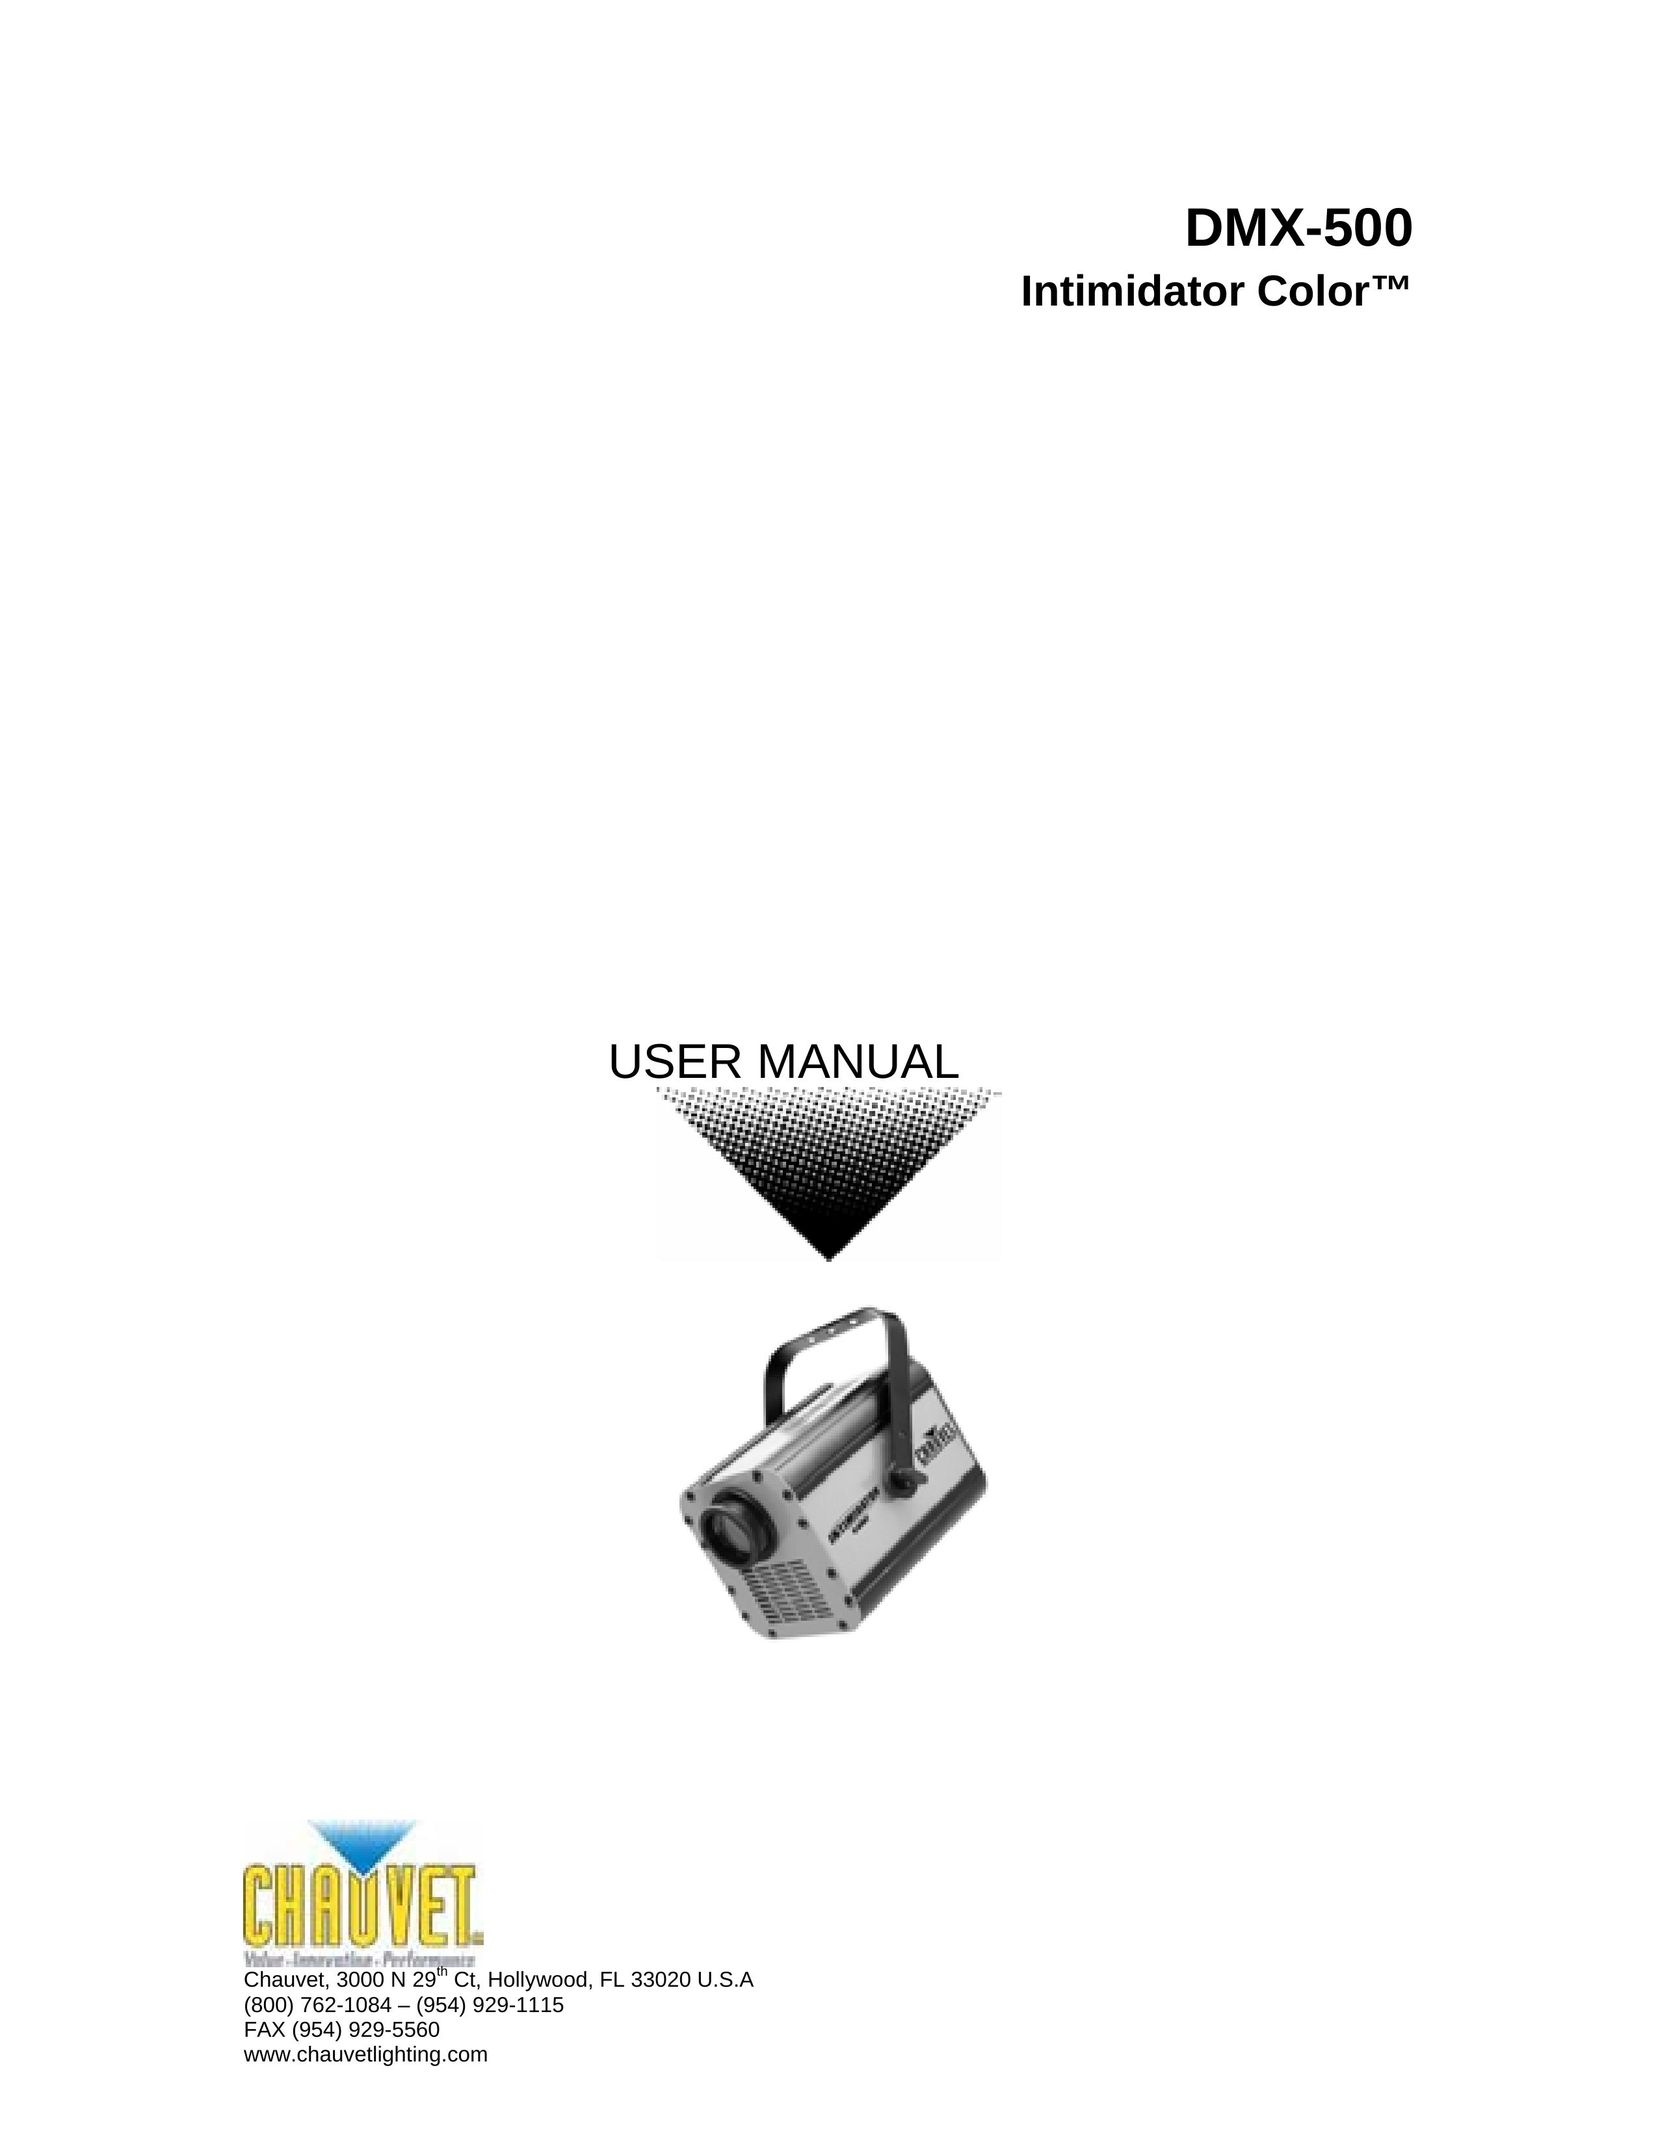 Chauvet DMX-500 Indoor Furnishings User Manual